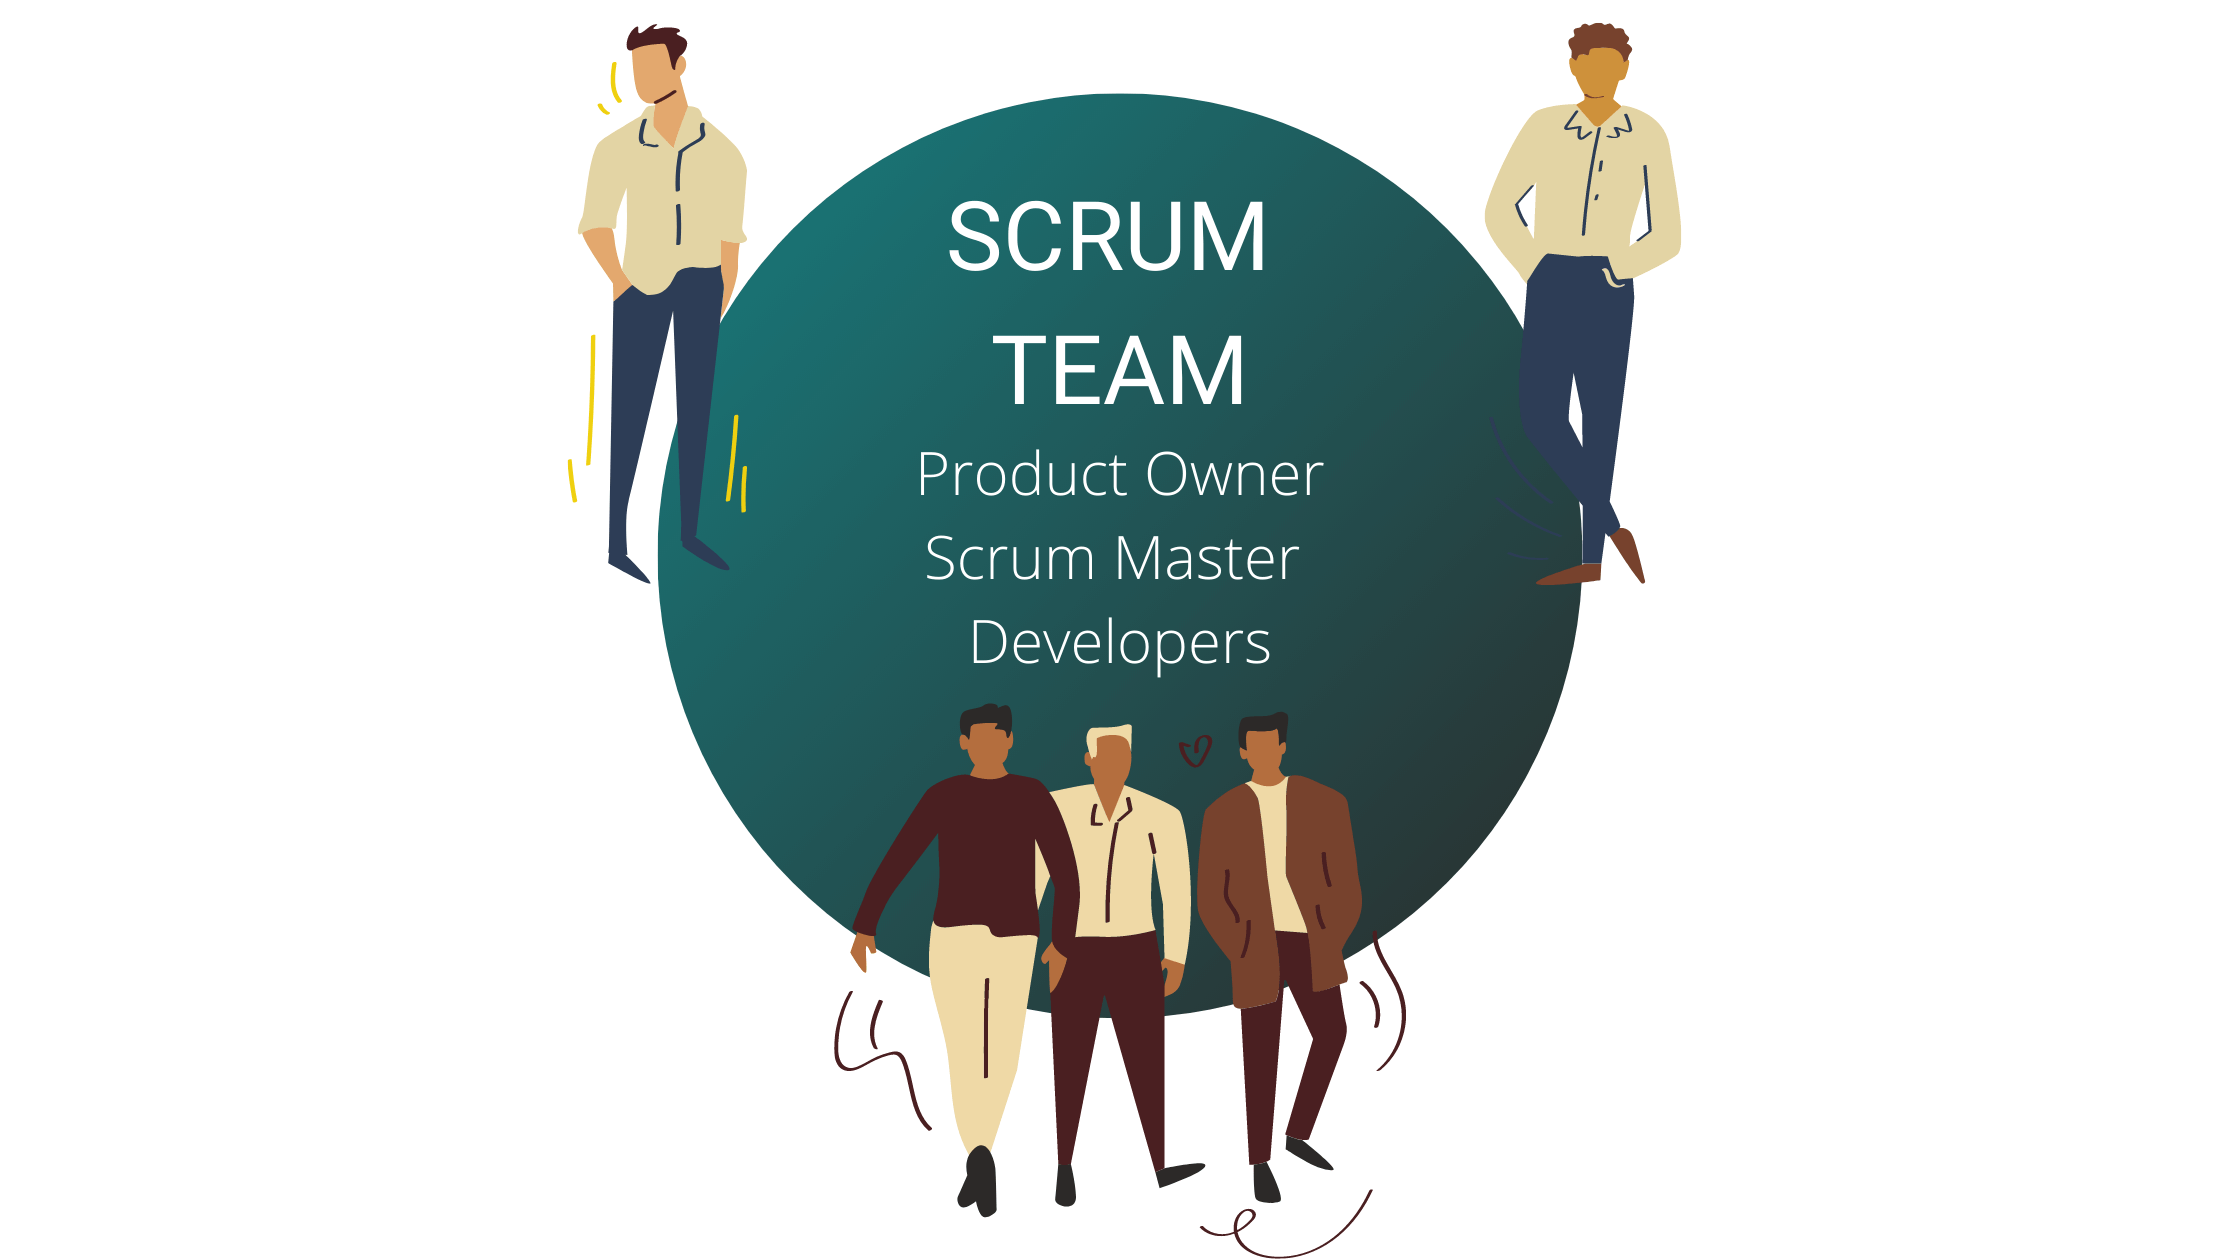 Scrum Team Scrum Guide 2020 Product Owner Scrum Master Developers